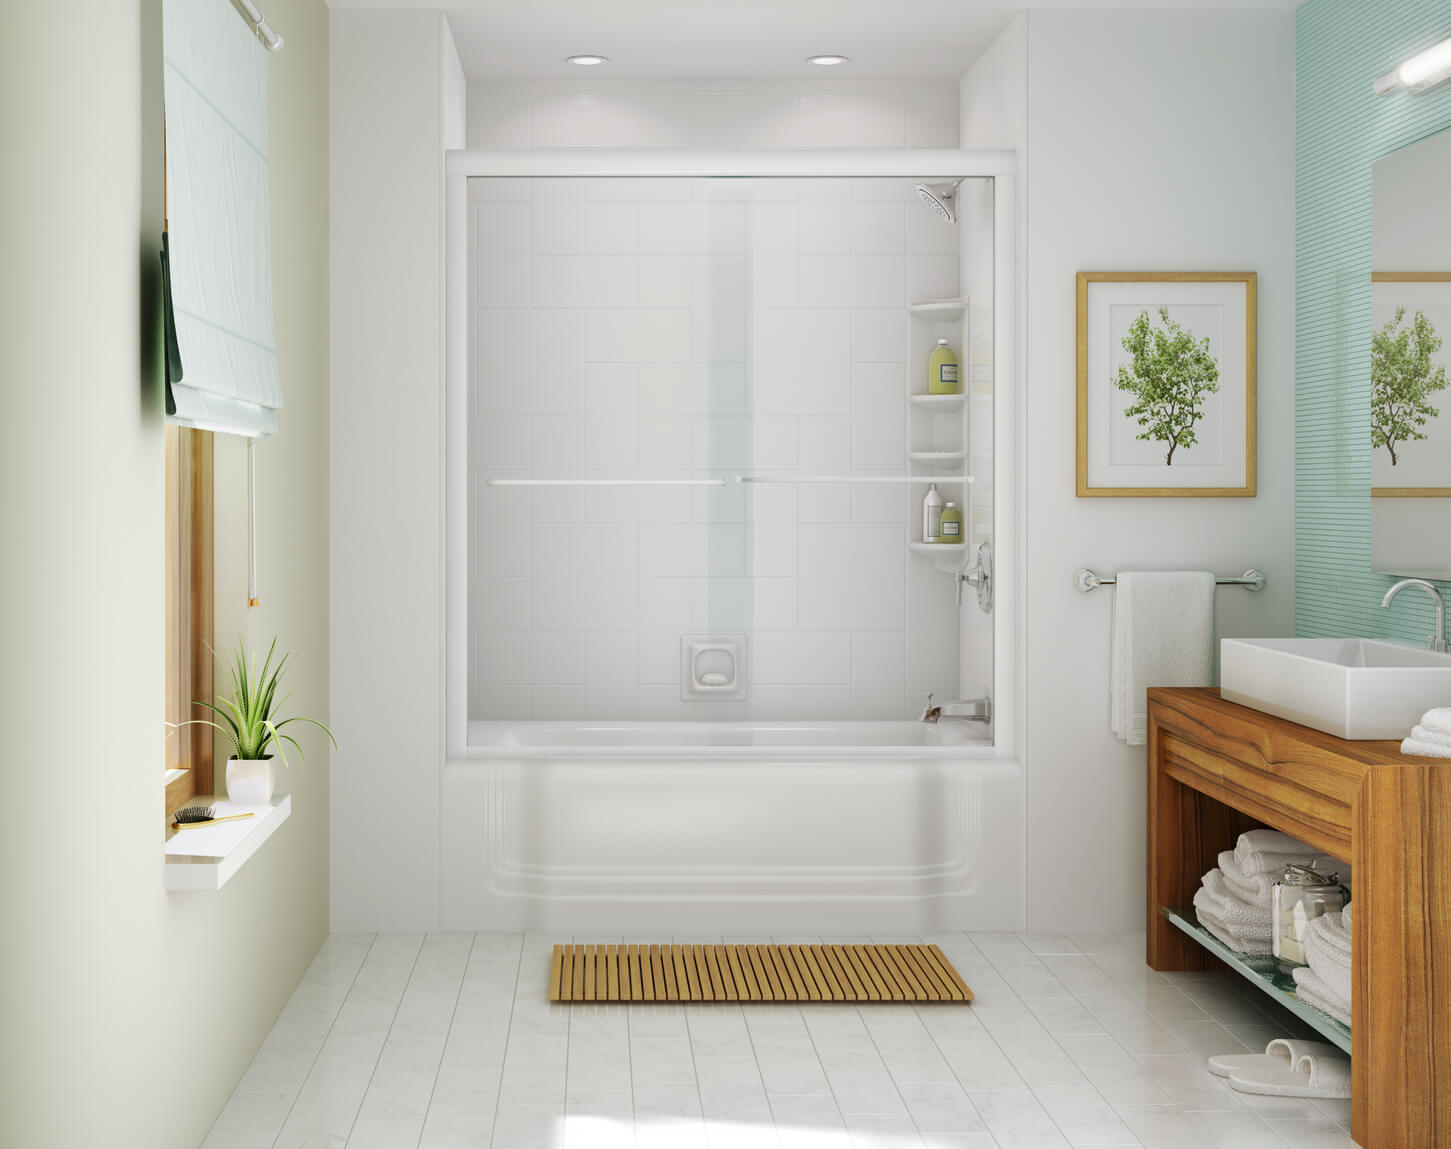 https://www.bathfitter.com/wp-content/uploads/2021/03/white-bathroom-decor-with-greeneries-1.jpg